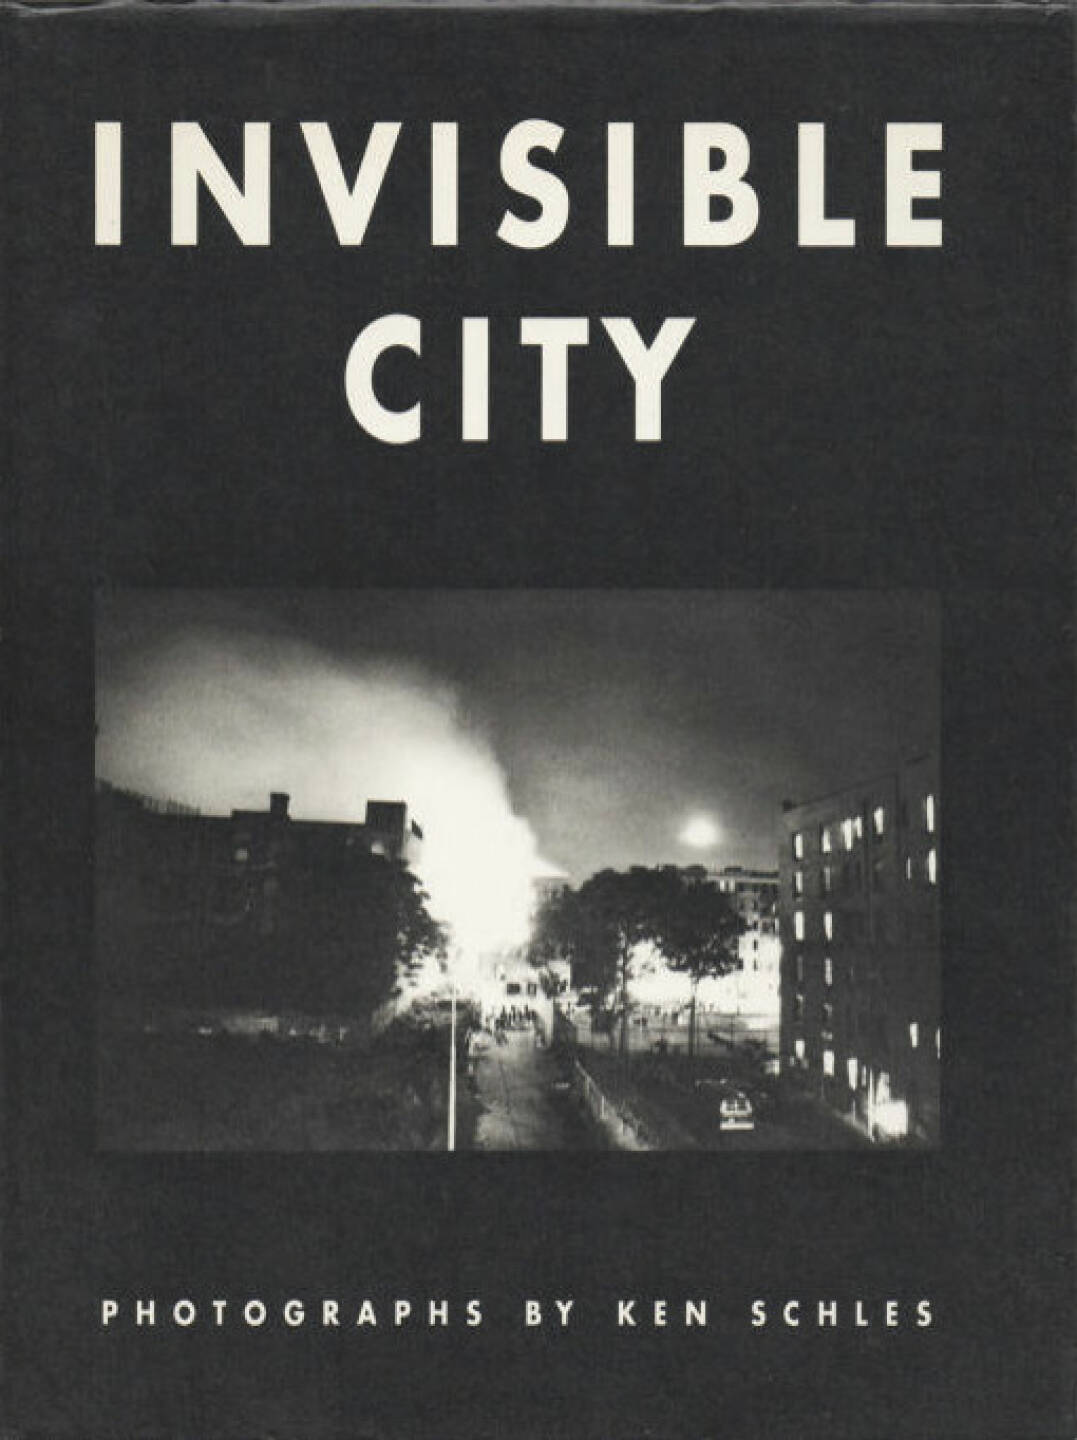 Ken Schles - Invisible City, Preis: 250-500 Euro, http://josefchladek.com/book/ken_schles_-_invisible_city